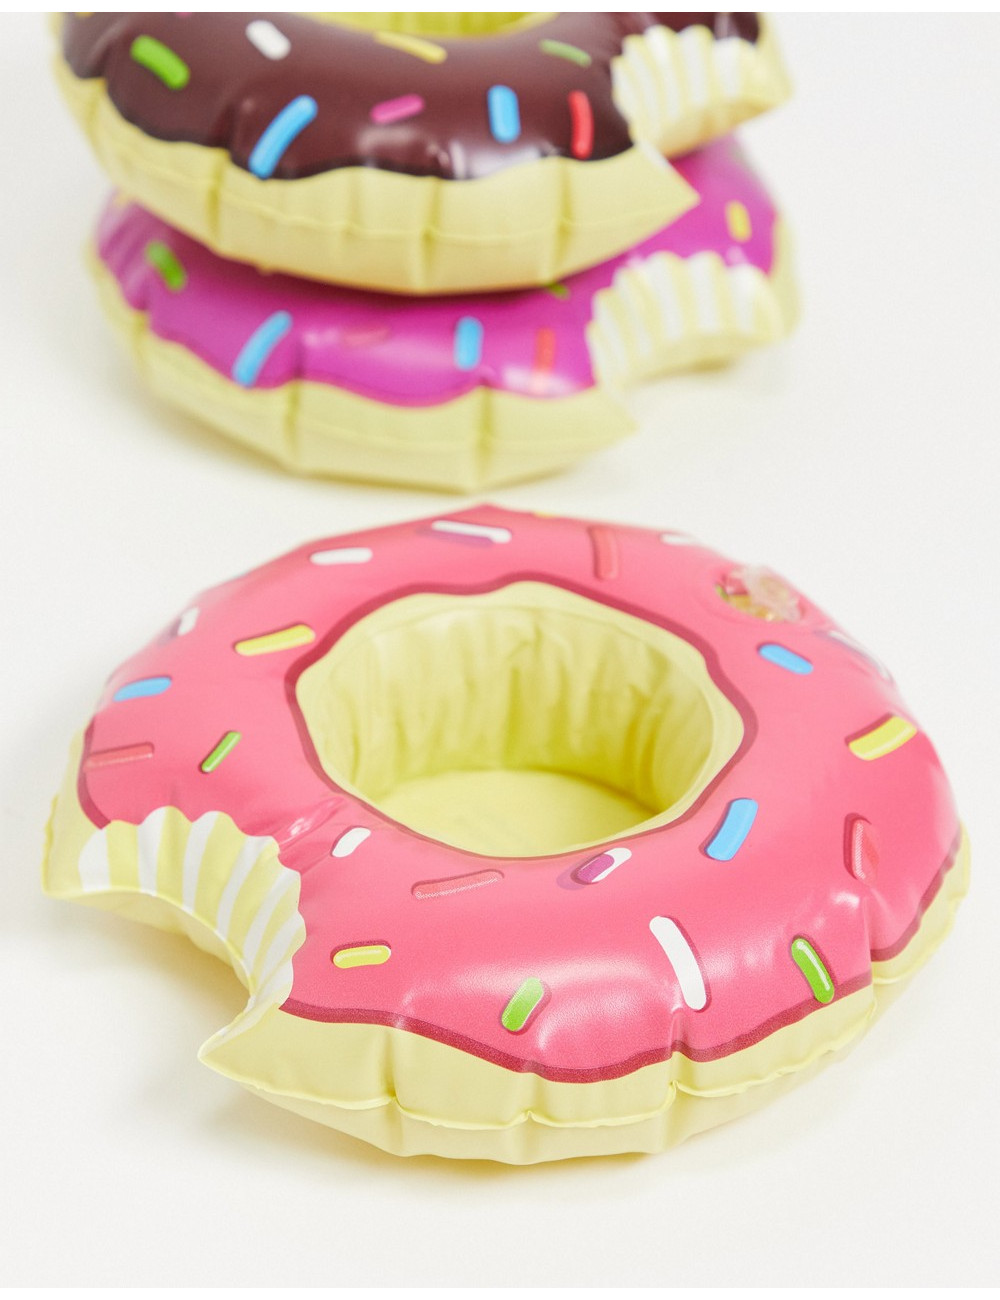 Big Mouth doughnuts...